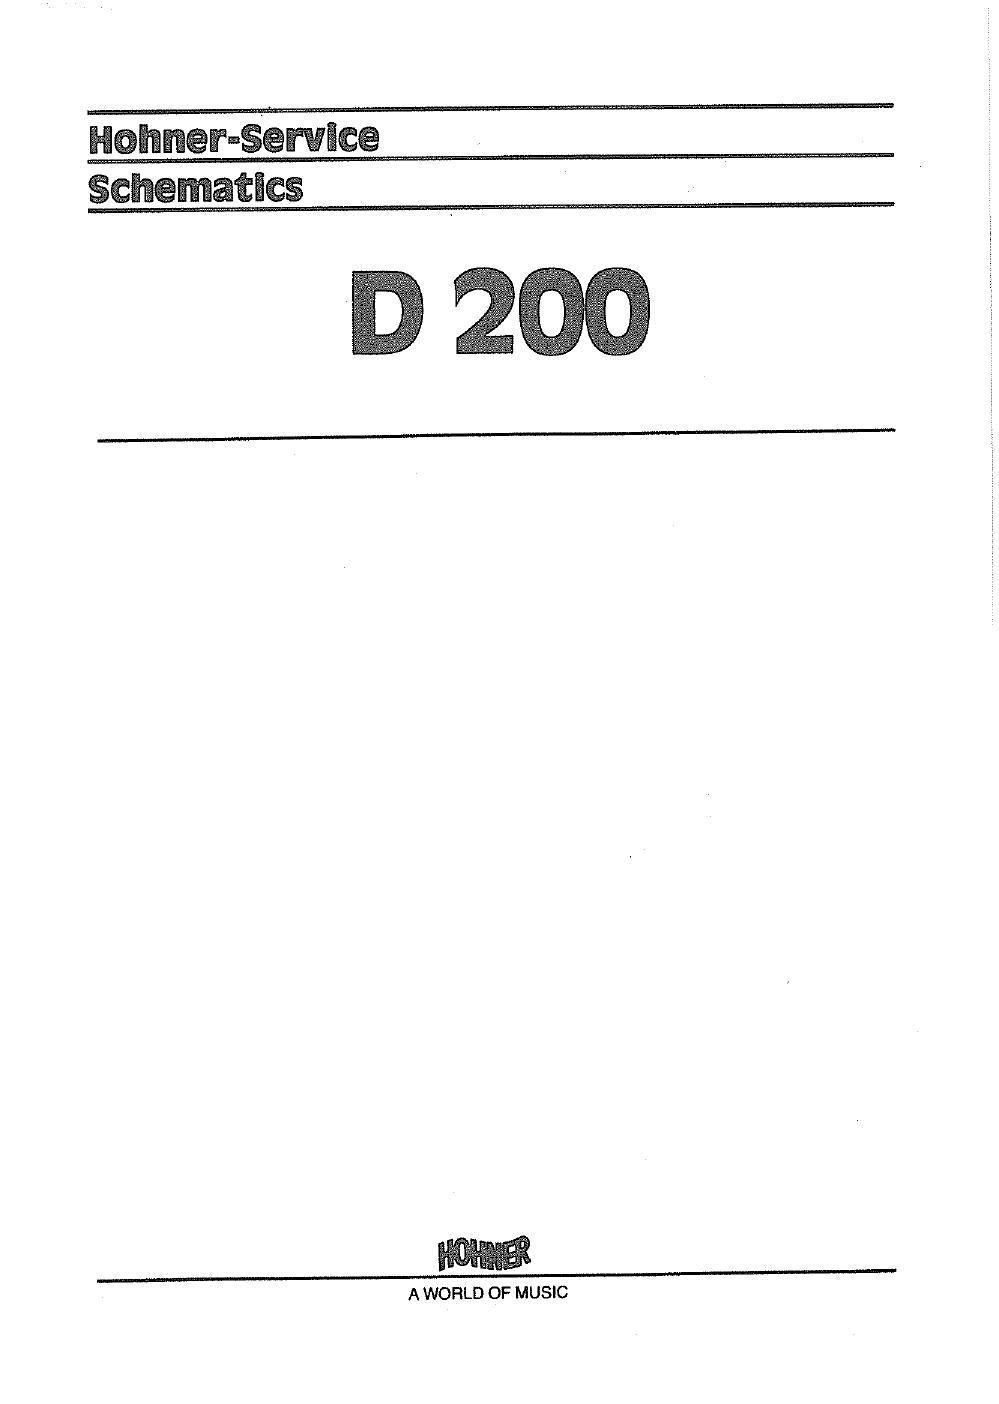 hohner symphony d200 service manual